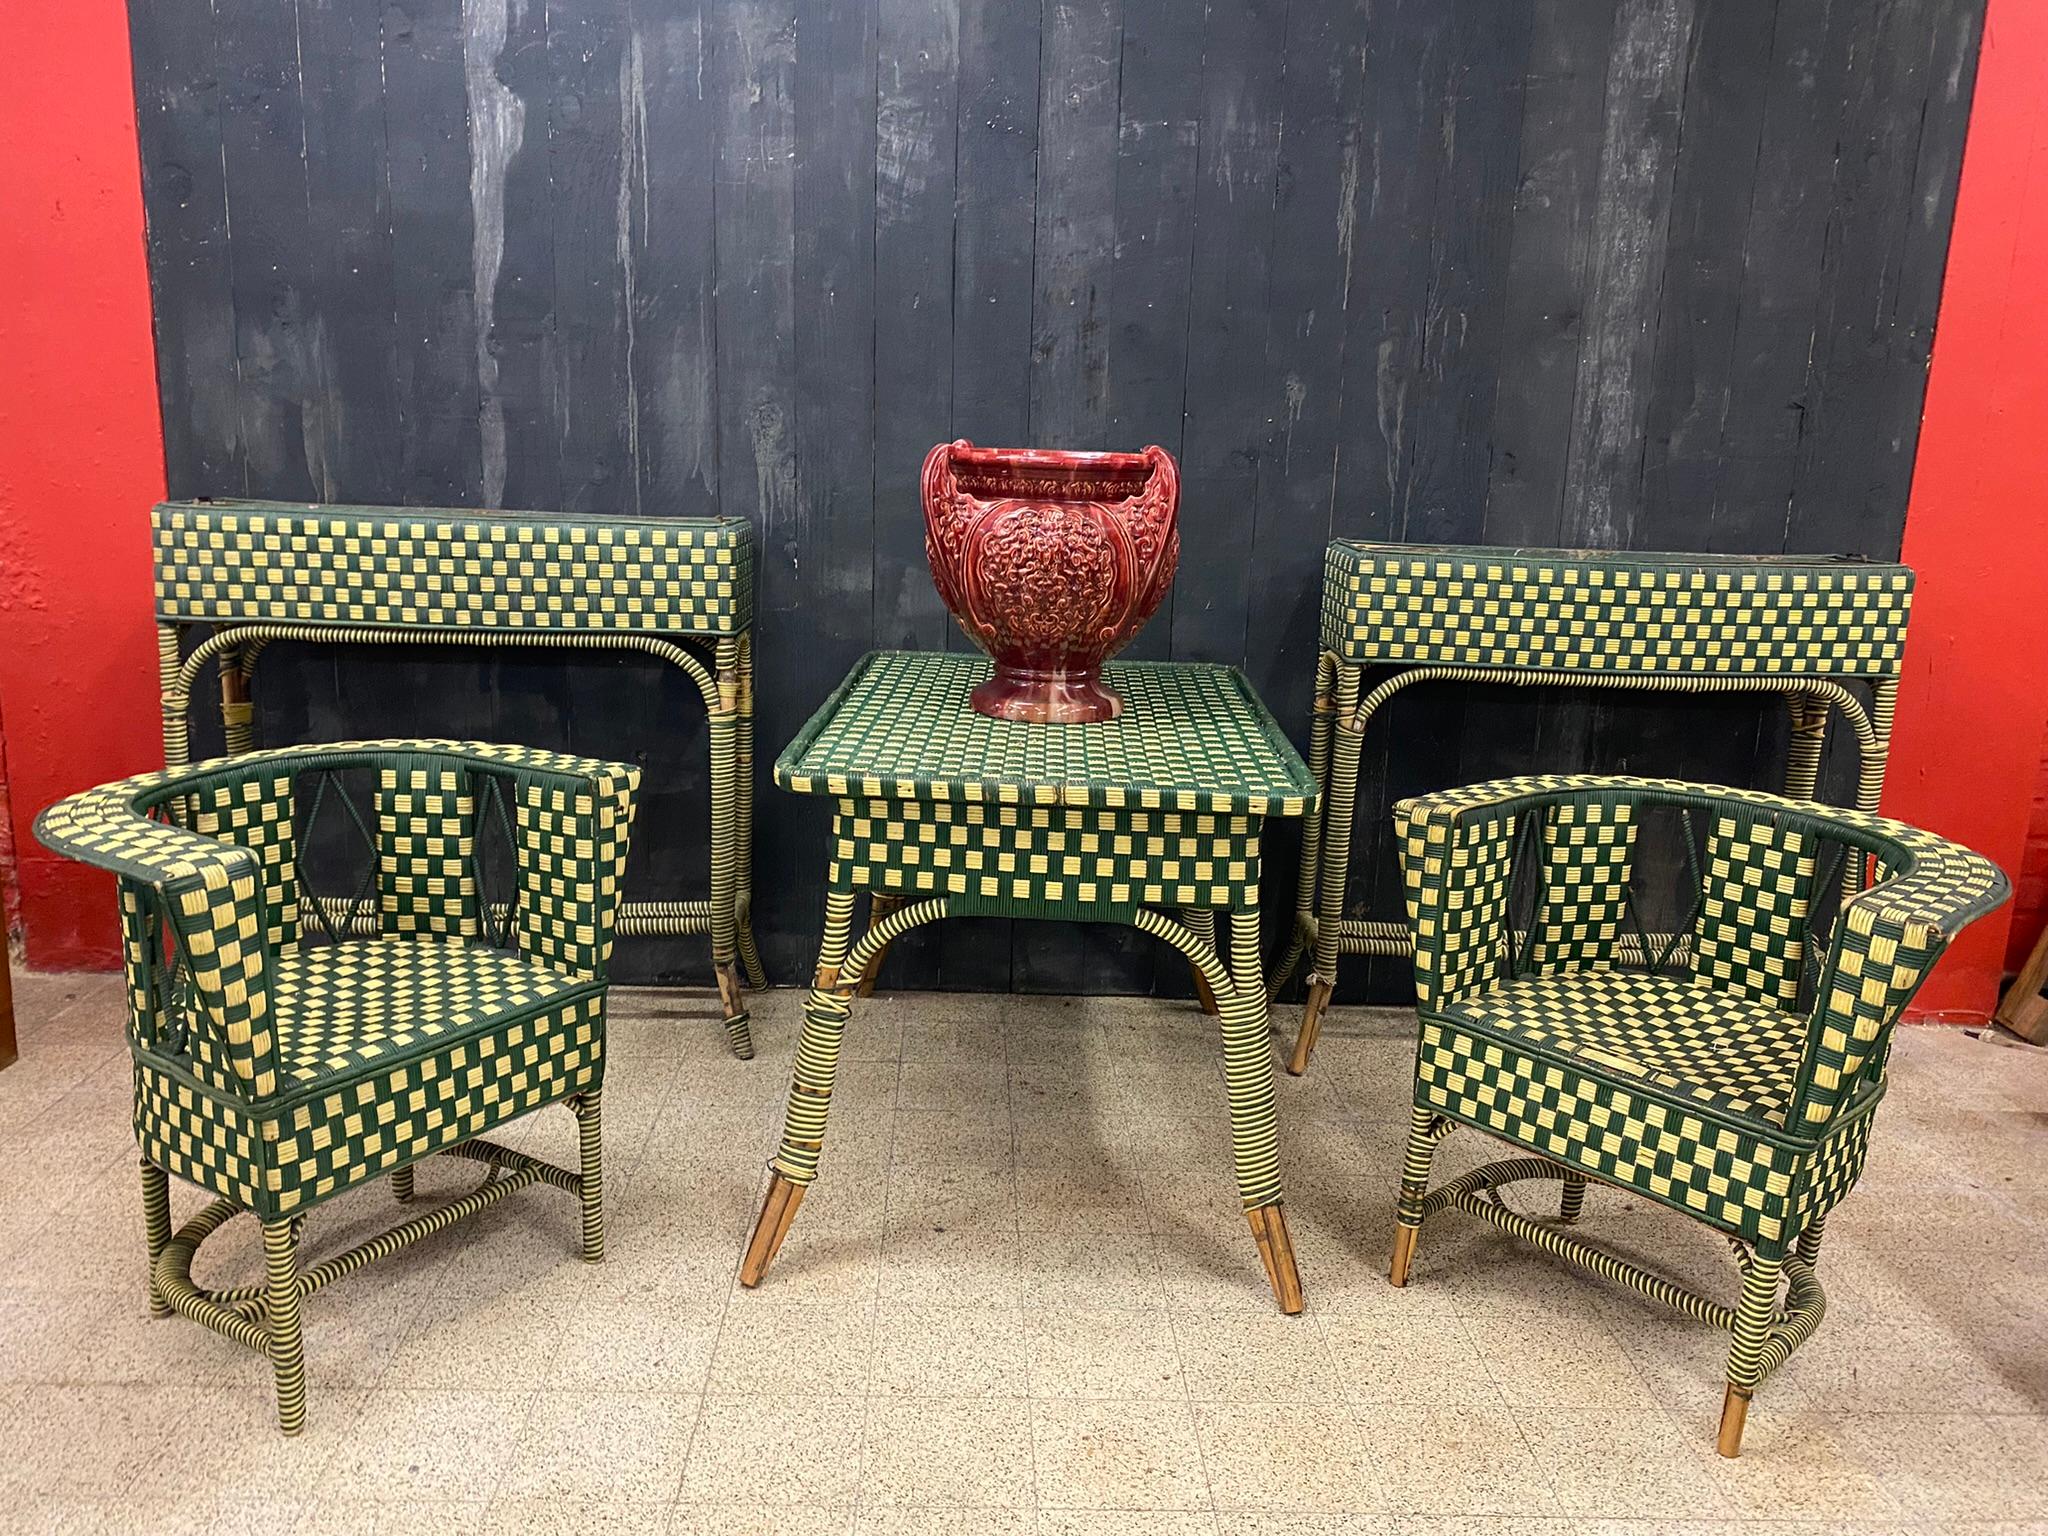 Rattan Art Deco living room circa 1925 including
1 table, dim: 73x105x75 cm
2 armchairs, dim: Hauteur : 70 cm (27,56 po)Largeur : 68 cm (26,78 po)Profondeur : 50 cm (19,69 po)Hauteur de l'assise : 43 cm (16,93 po)
2 planters with their zinc tray,